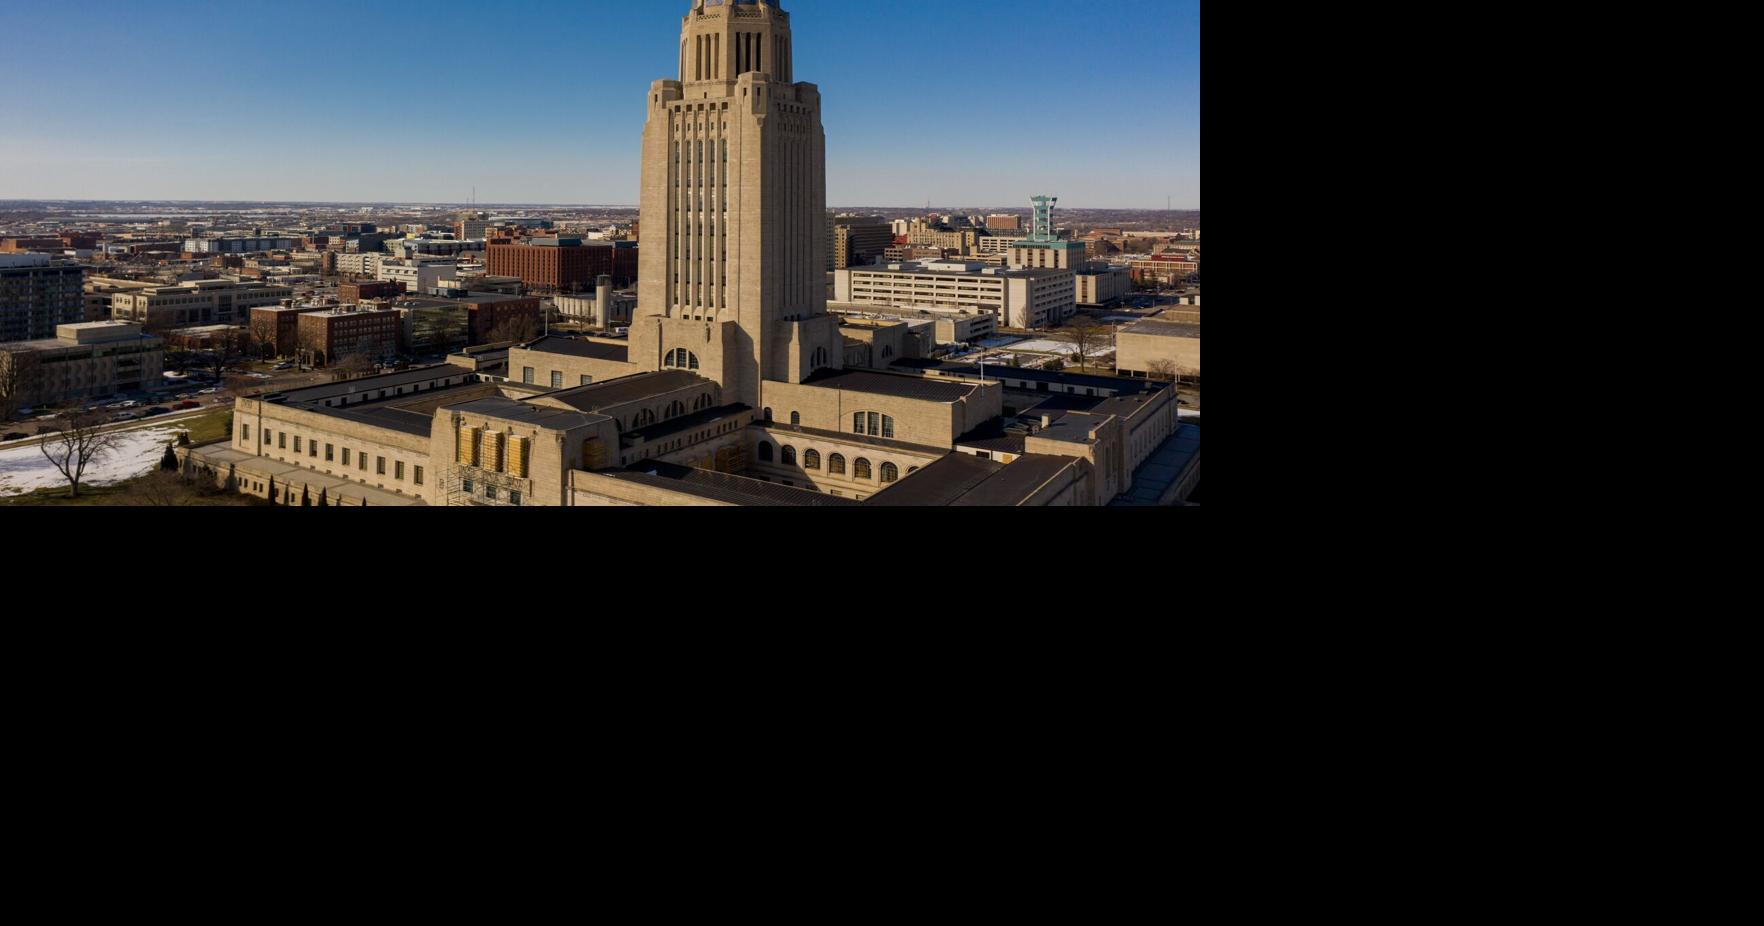 Nebraska will receive $139,000 out of $16 million in data breach settlements